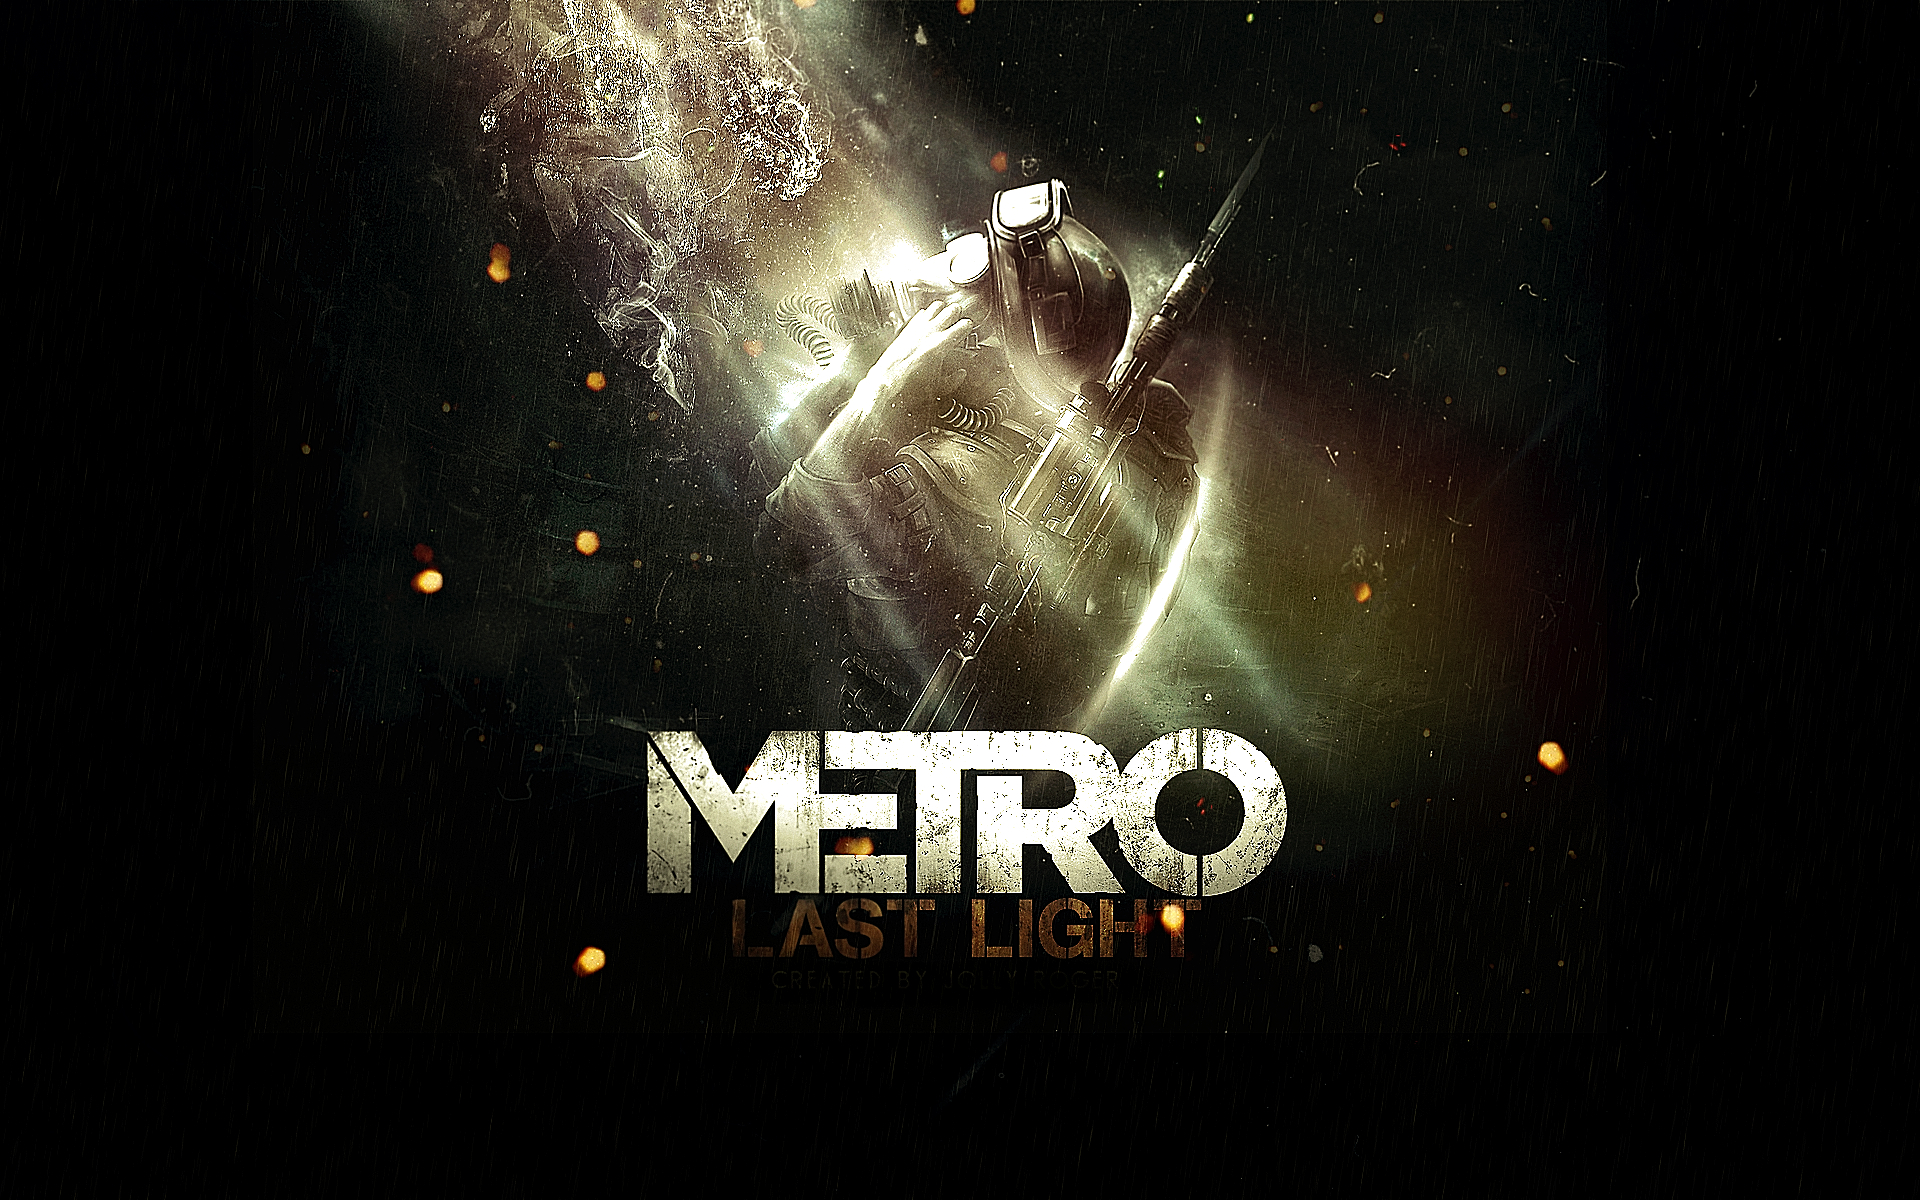 Metro Last Light Image Wallpapers